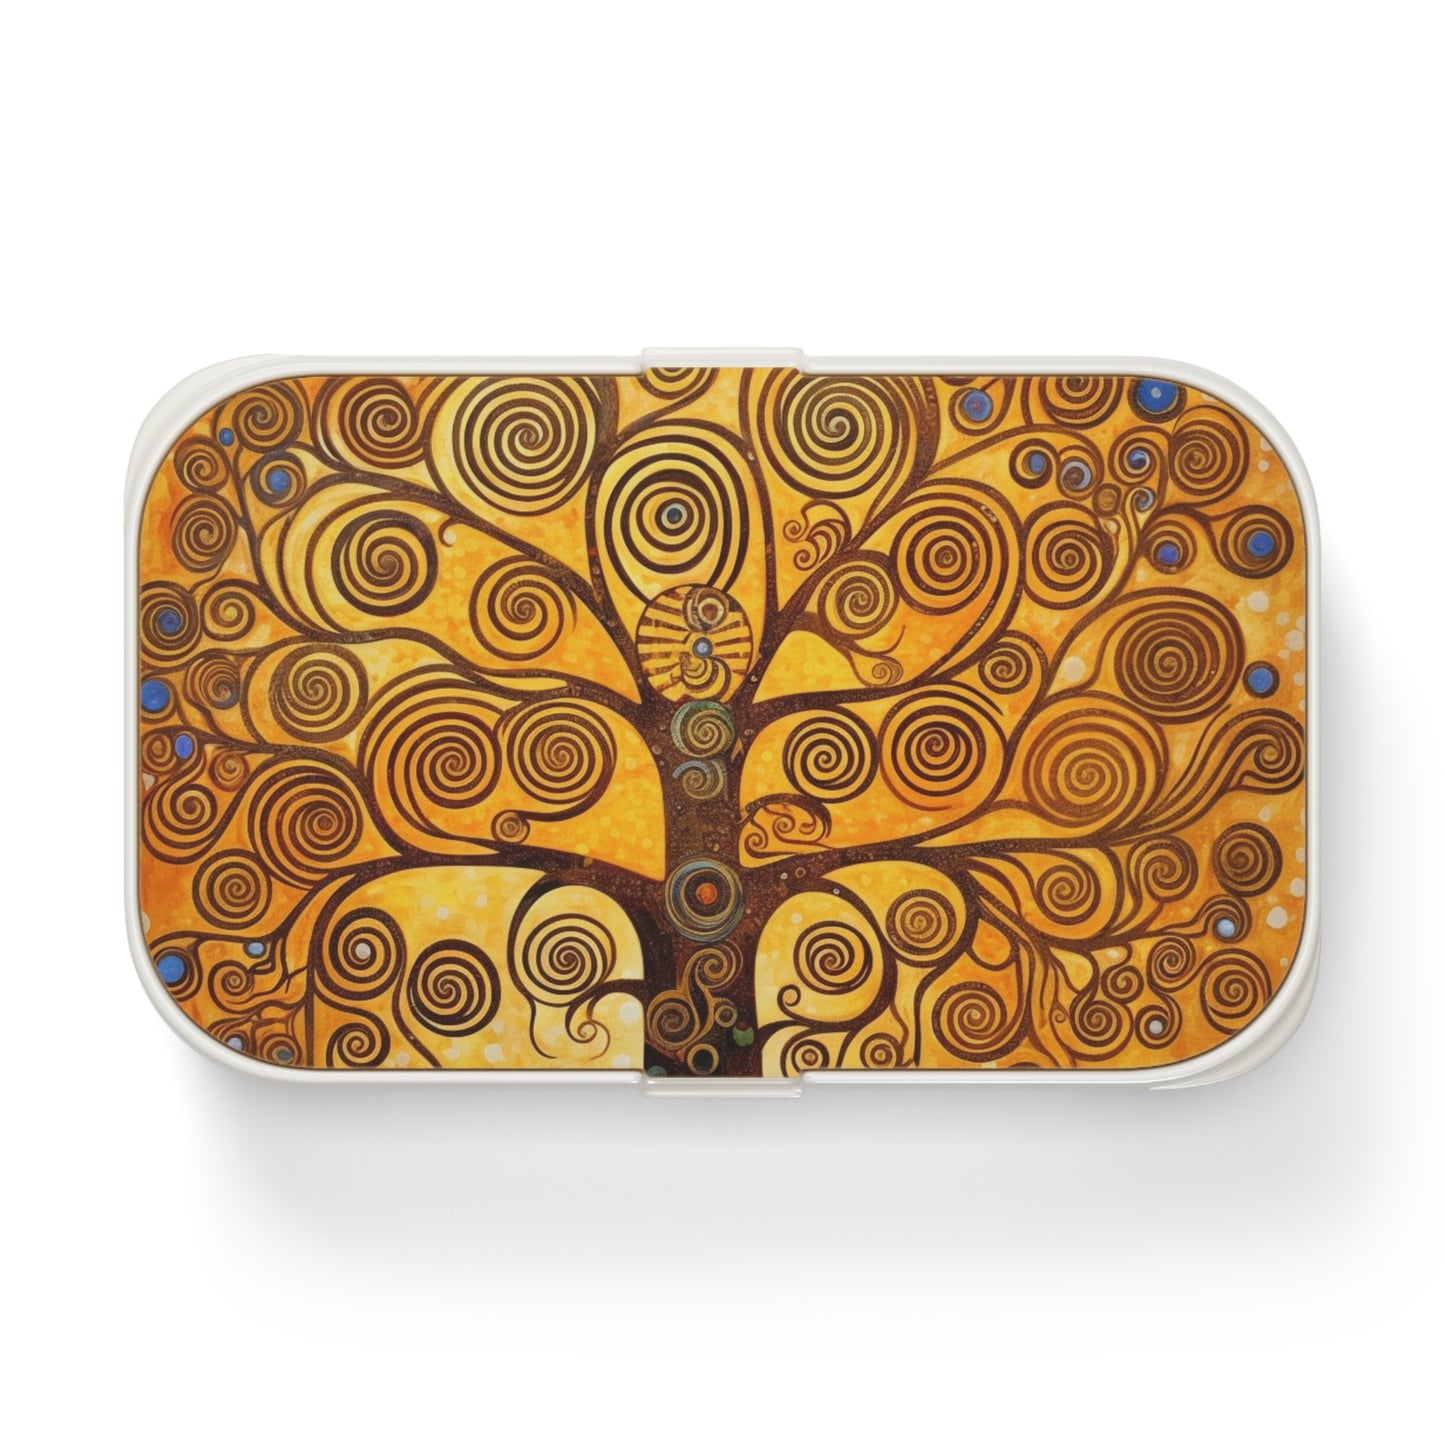 The Tree of Life Bento Box: A Modern Art Tribute to Gustav Klimt